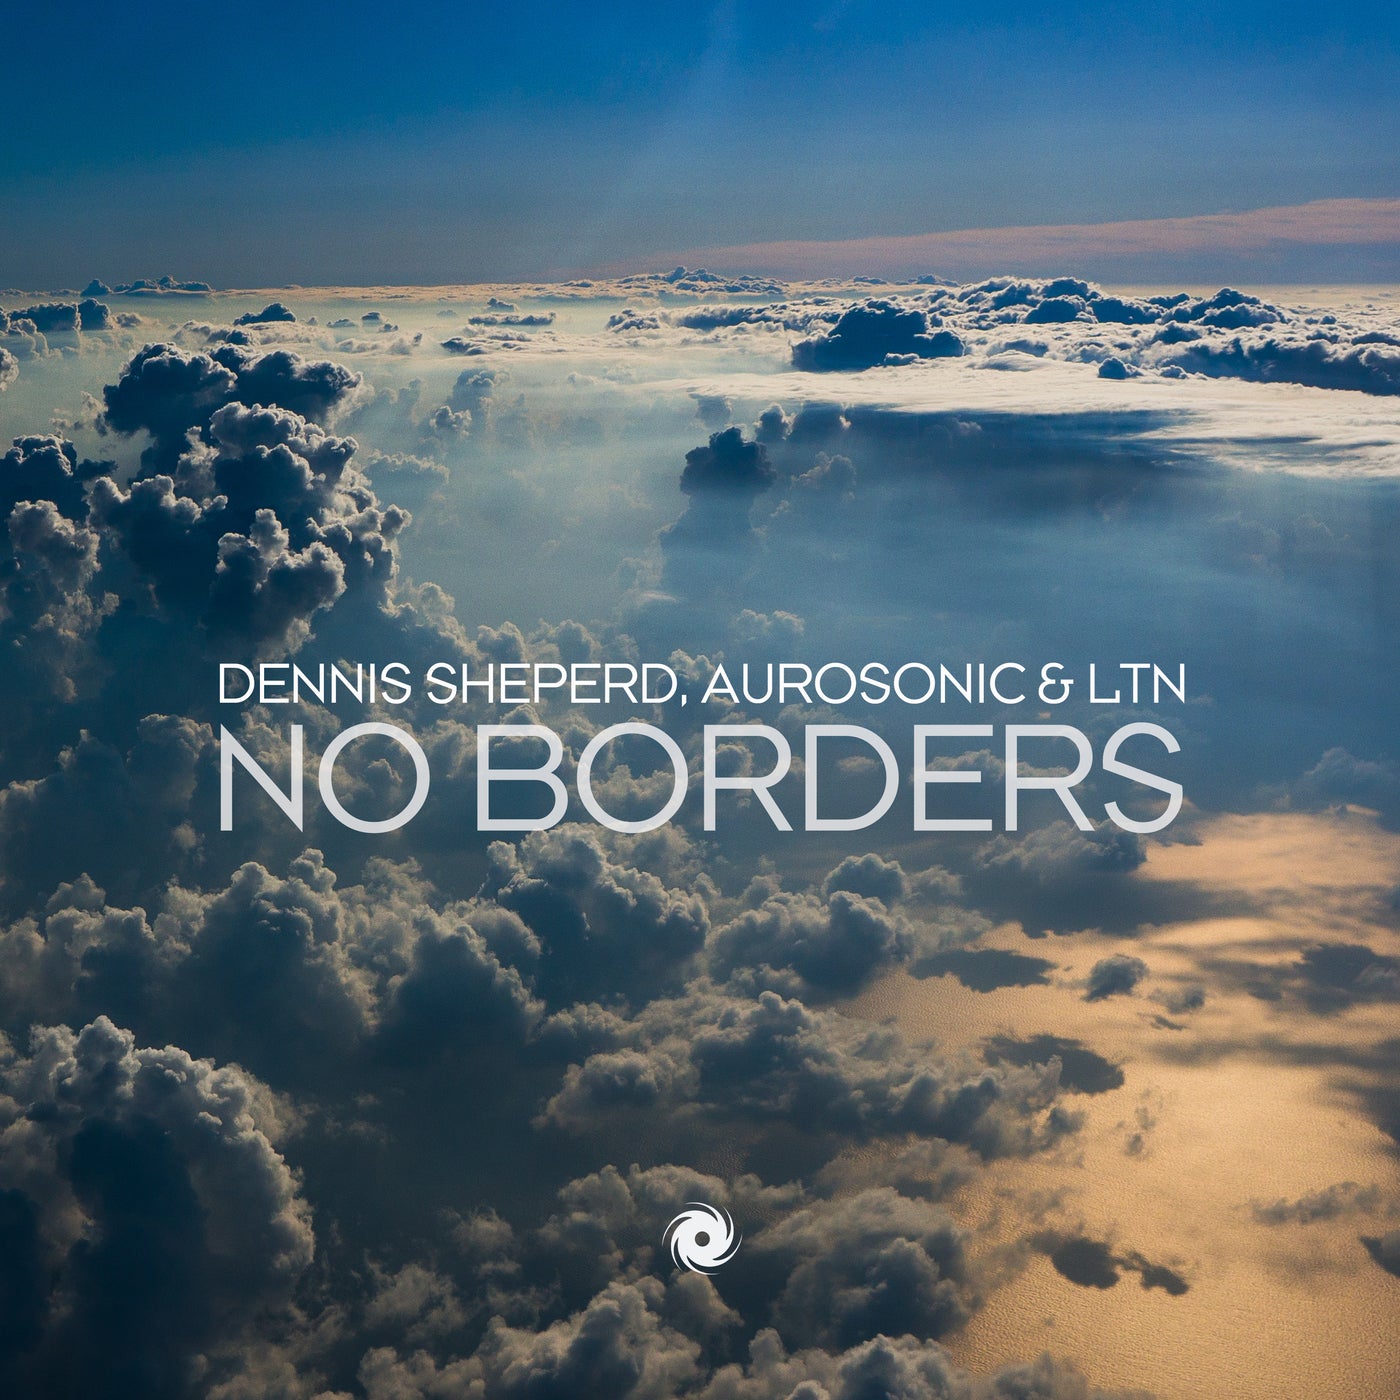 Dennis Shepard x Aurosonic feat. Ltn - No Borders (Extended Mix)